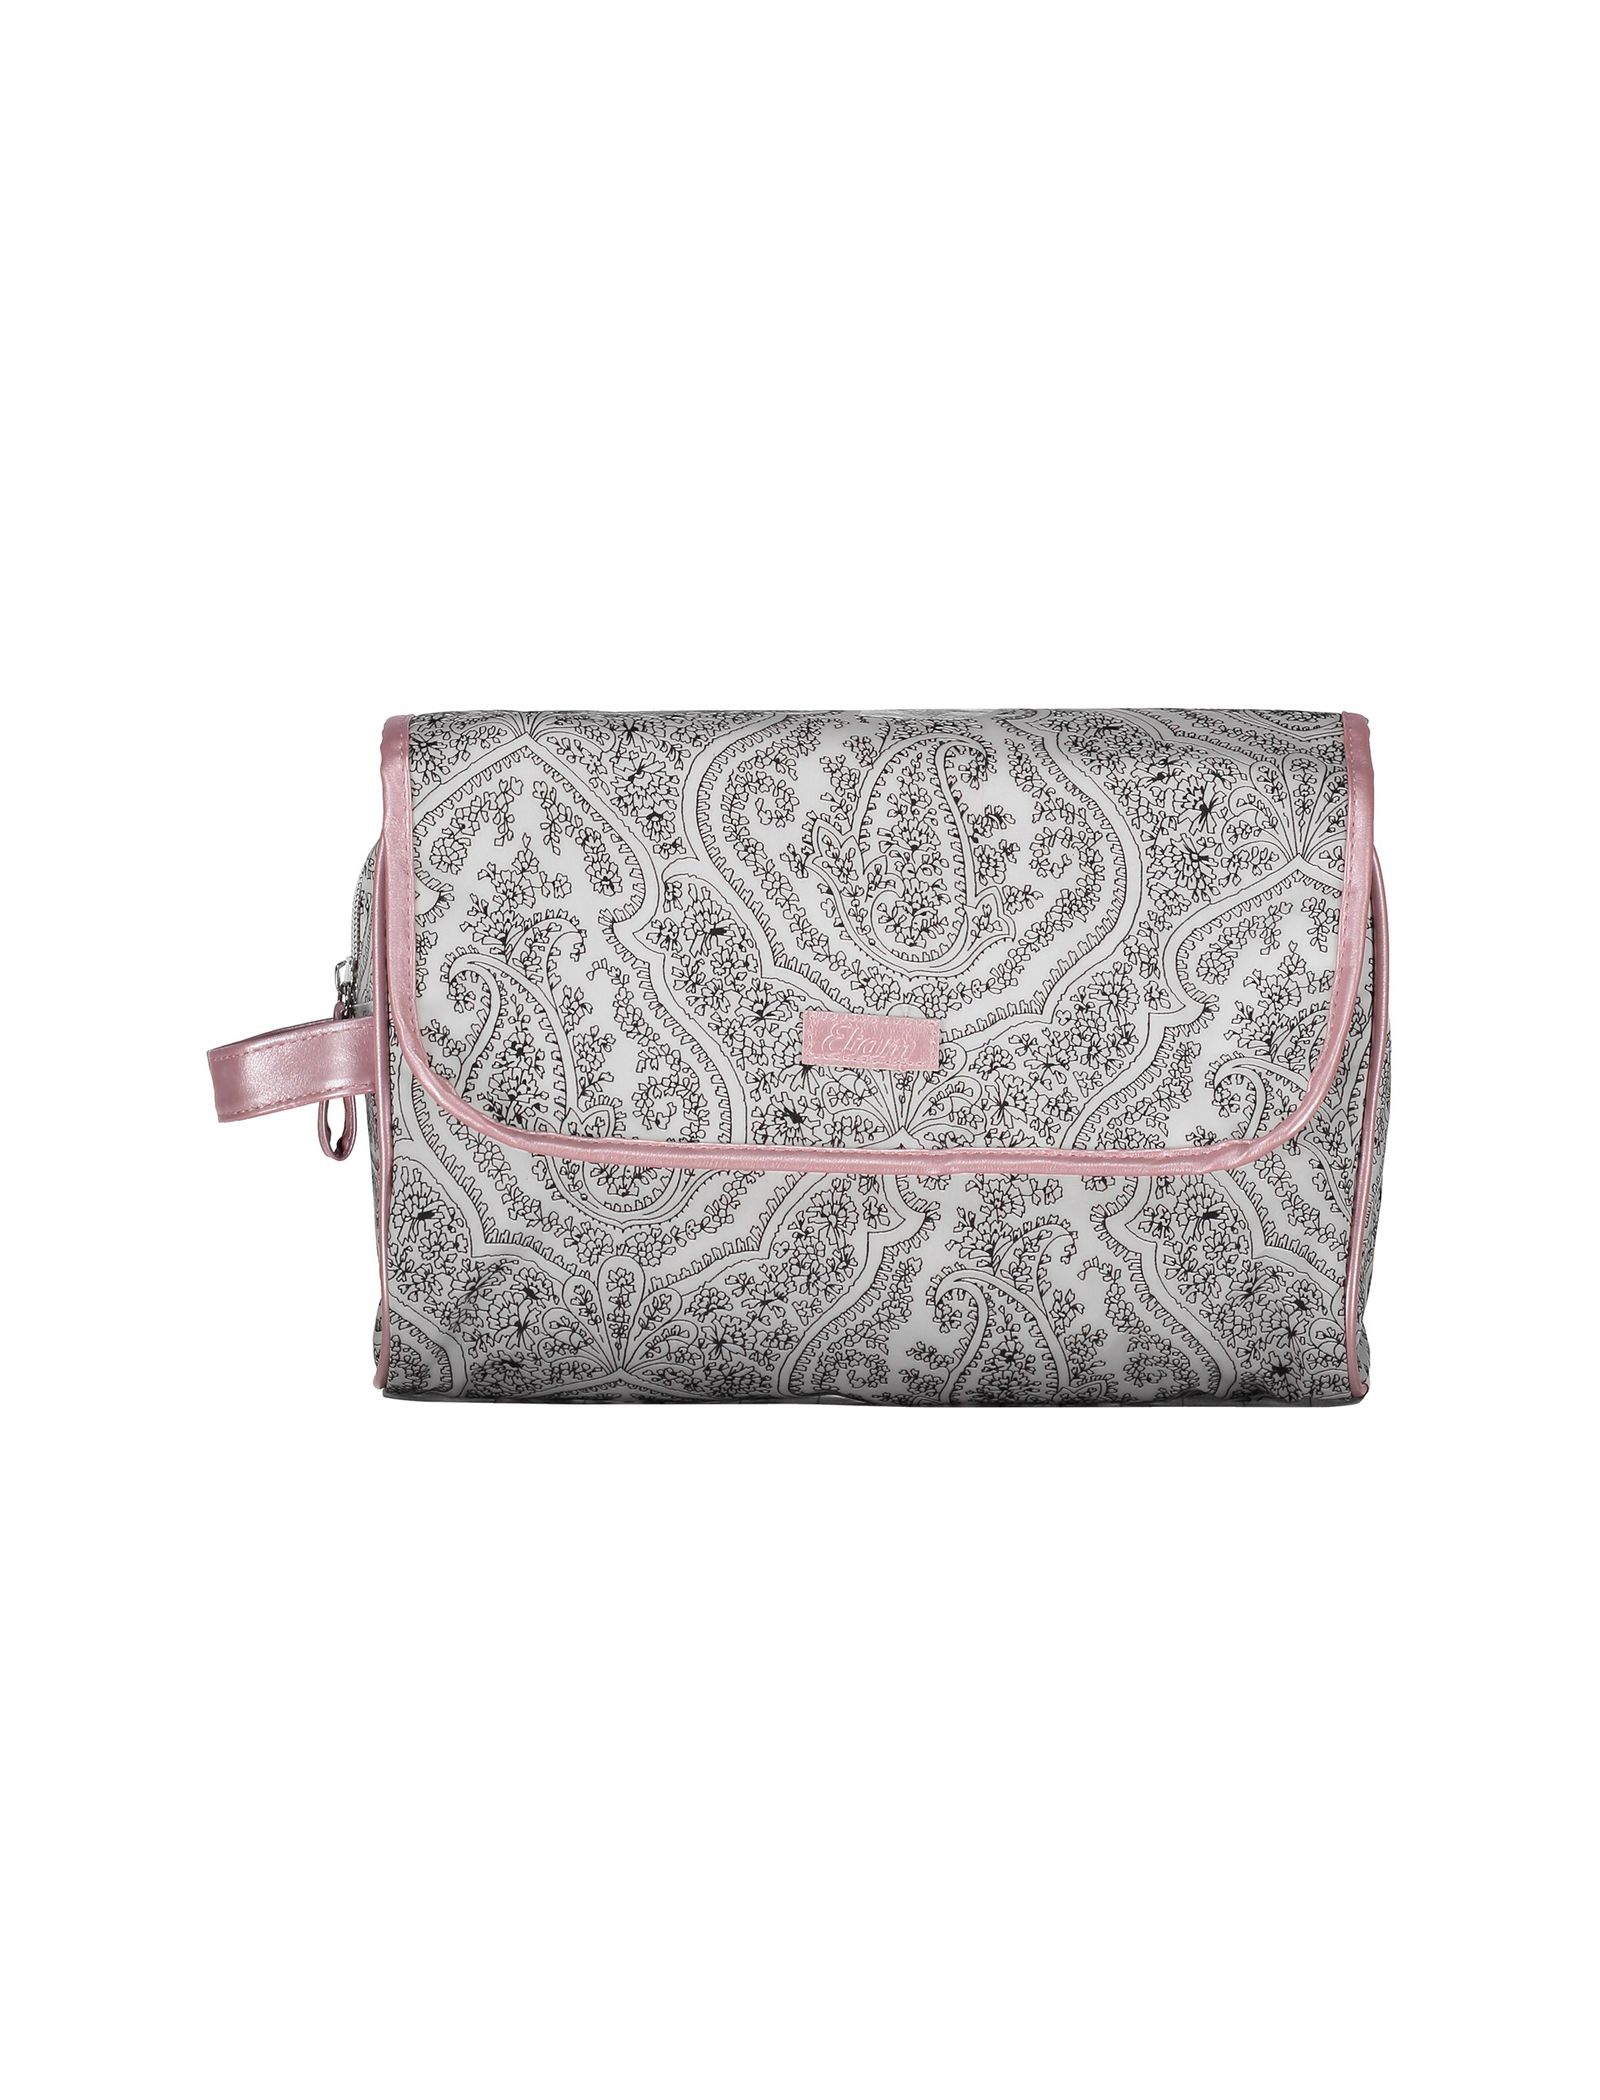 کیف لوازم آرایش زنانه - اتام - سفيد گلدار - 1